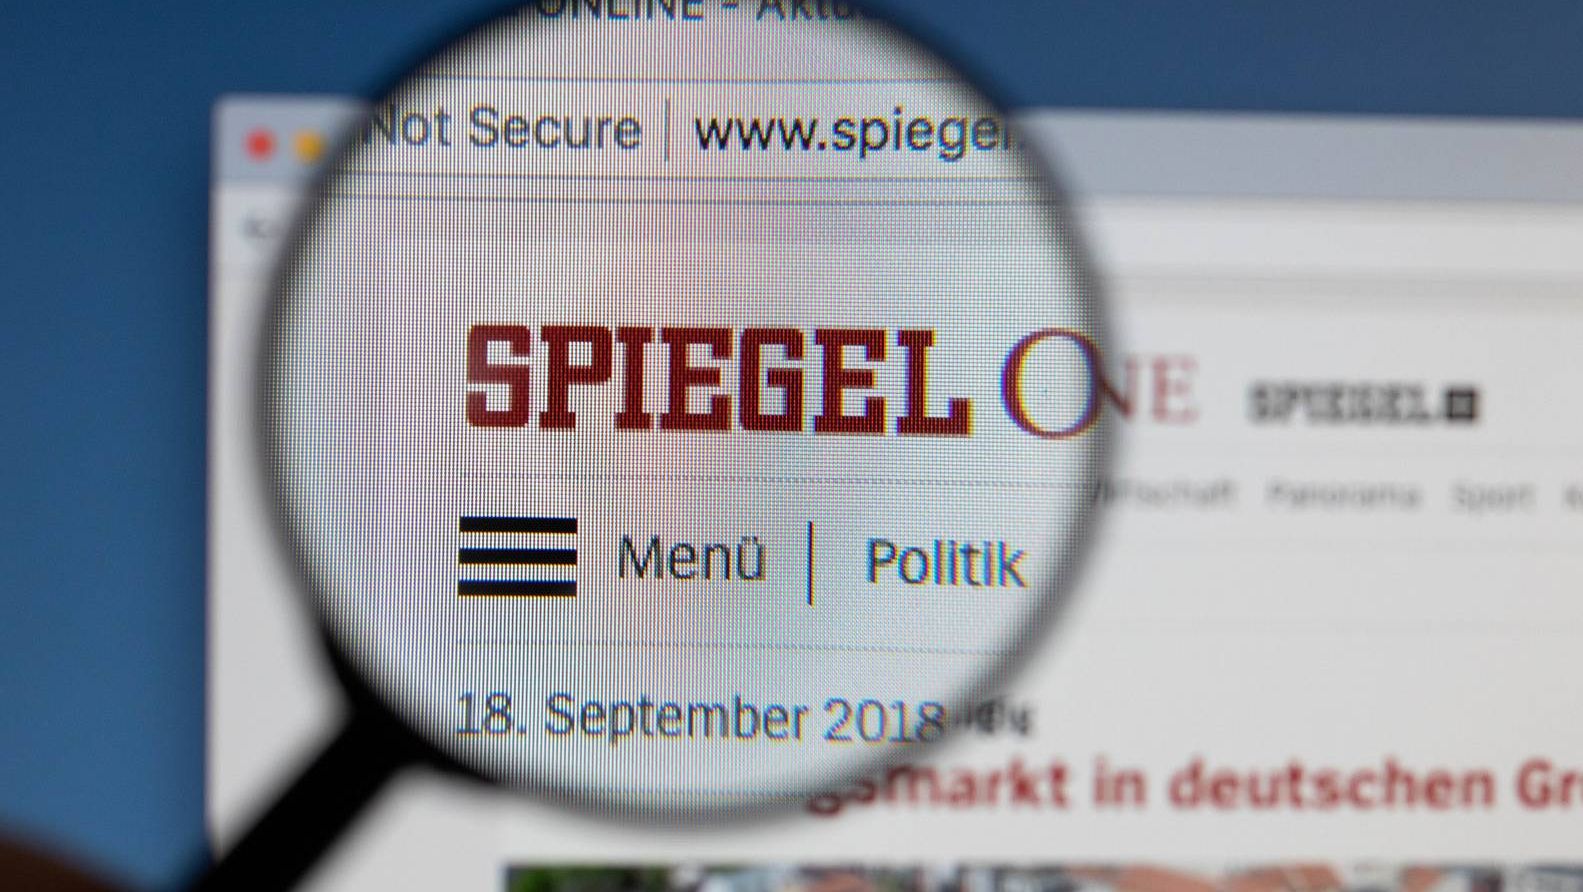 Сайт немецкого журнала Spiegel